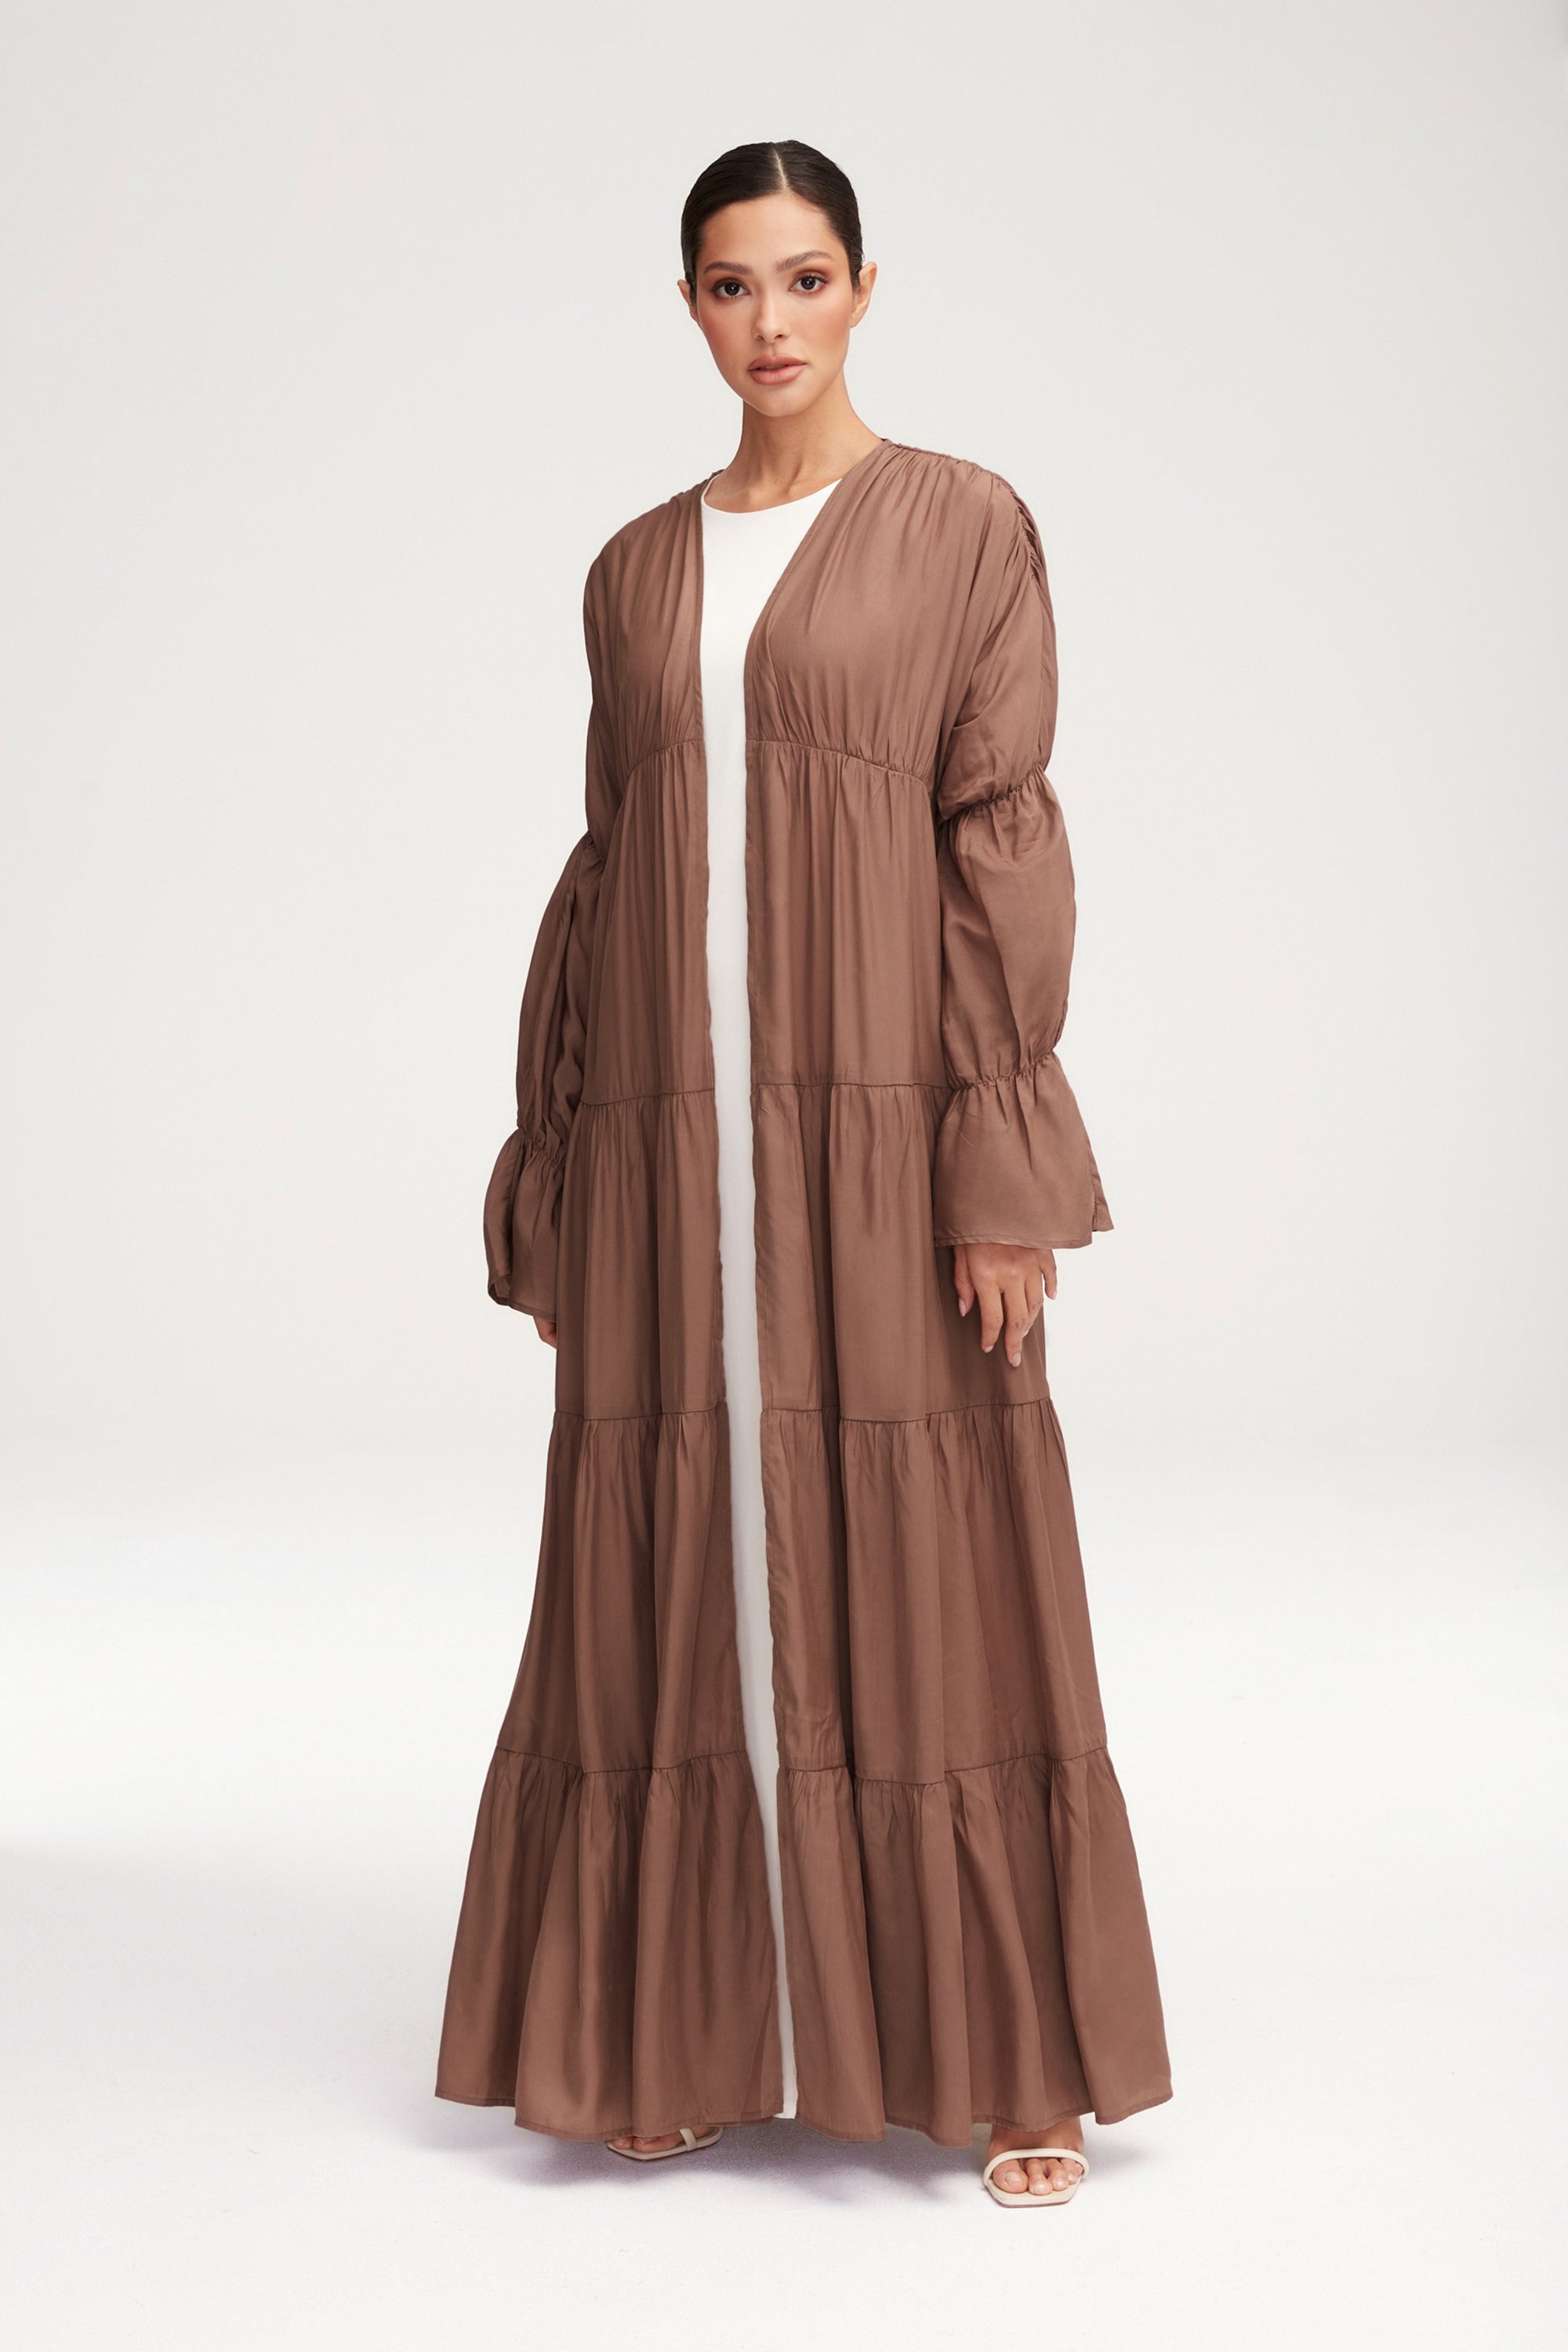 Malika Open Abaya - Pecan Clothing Veiled 